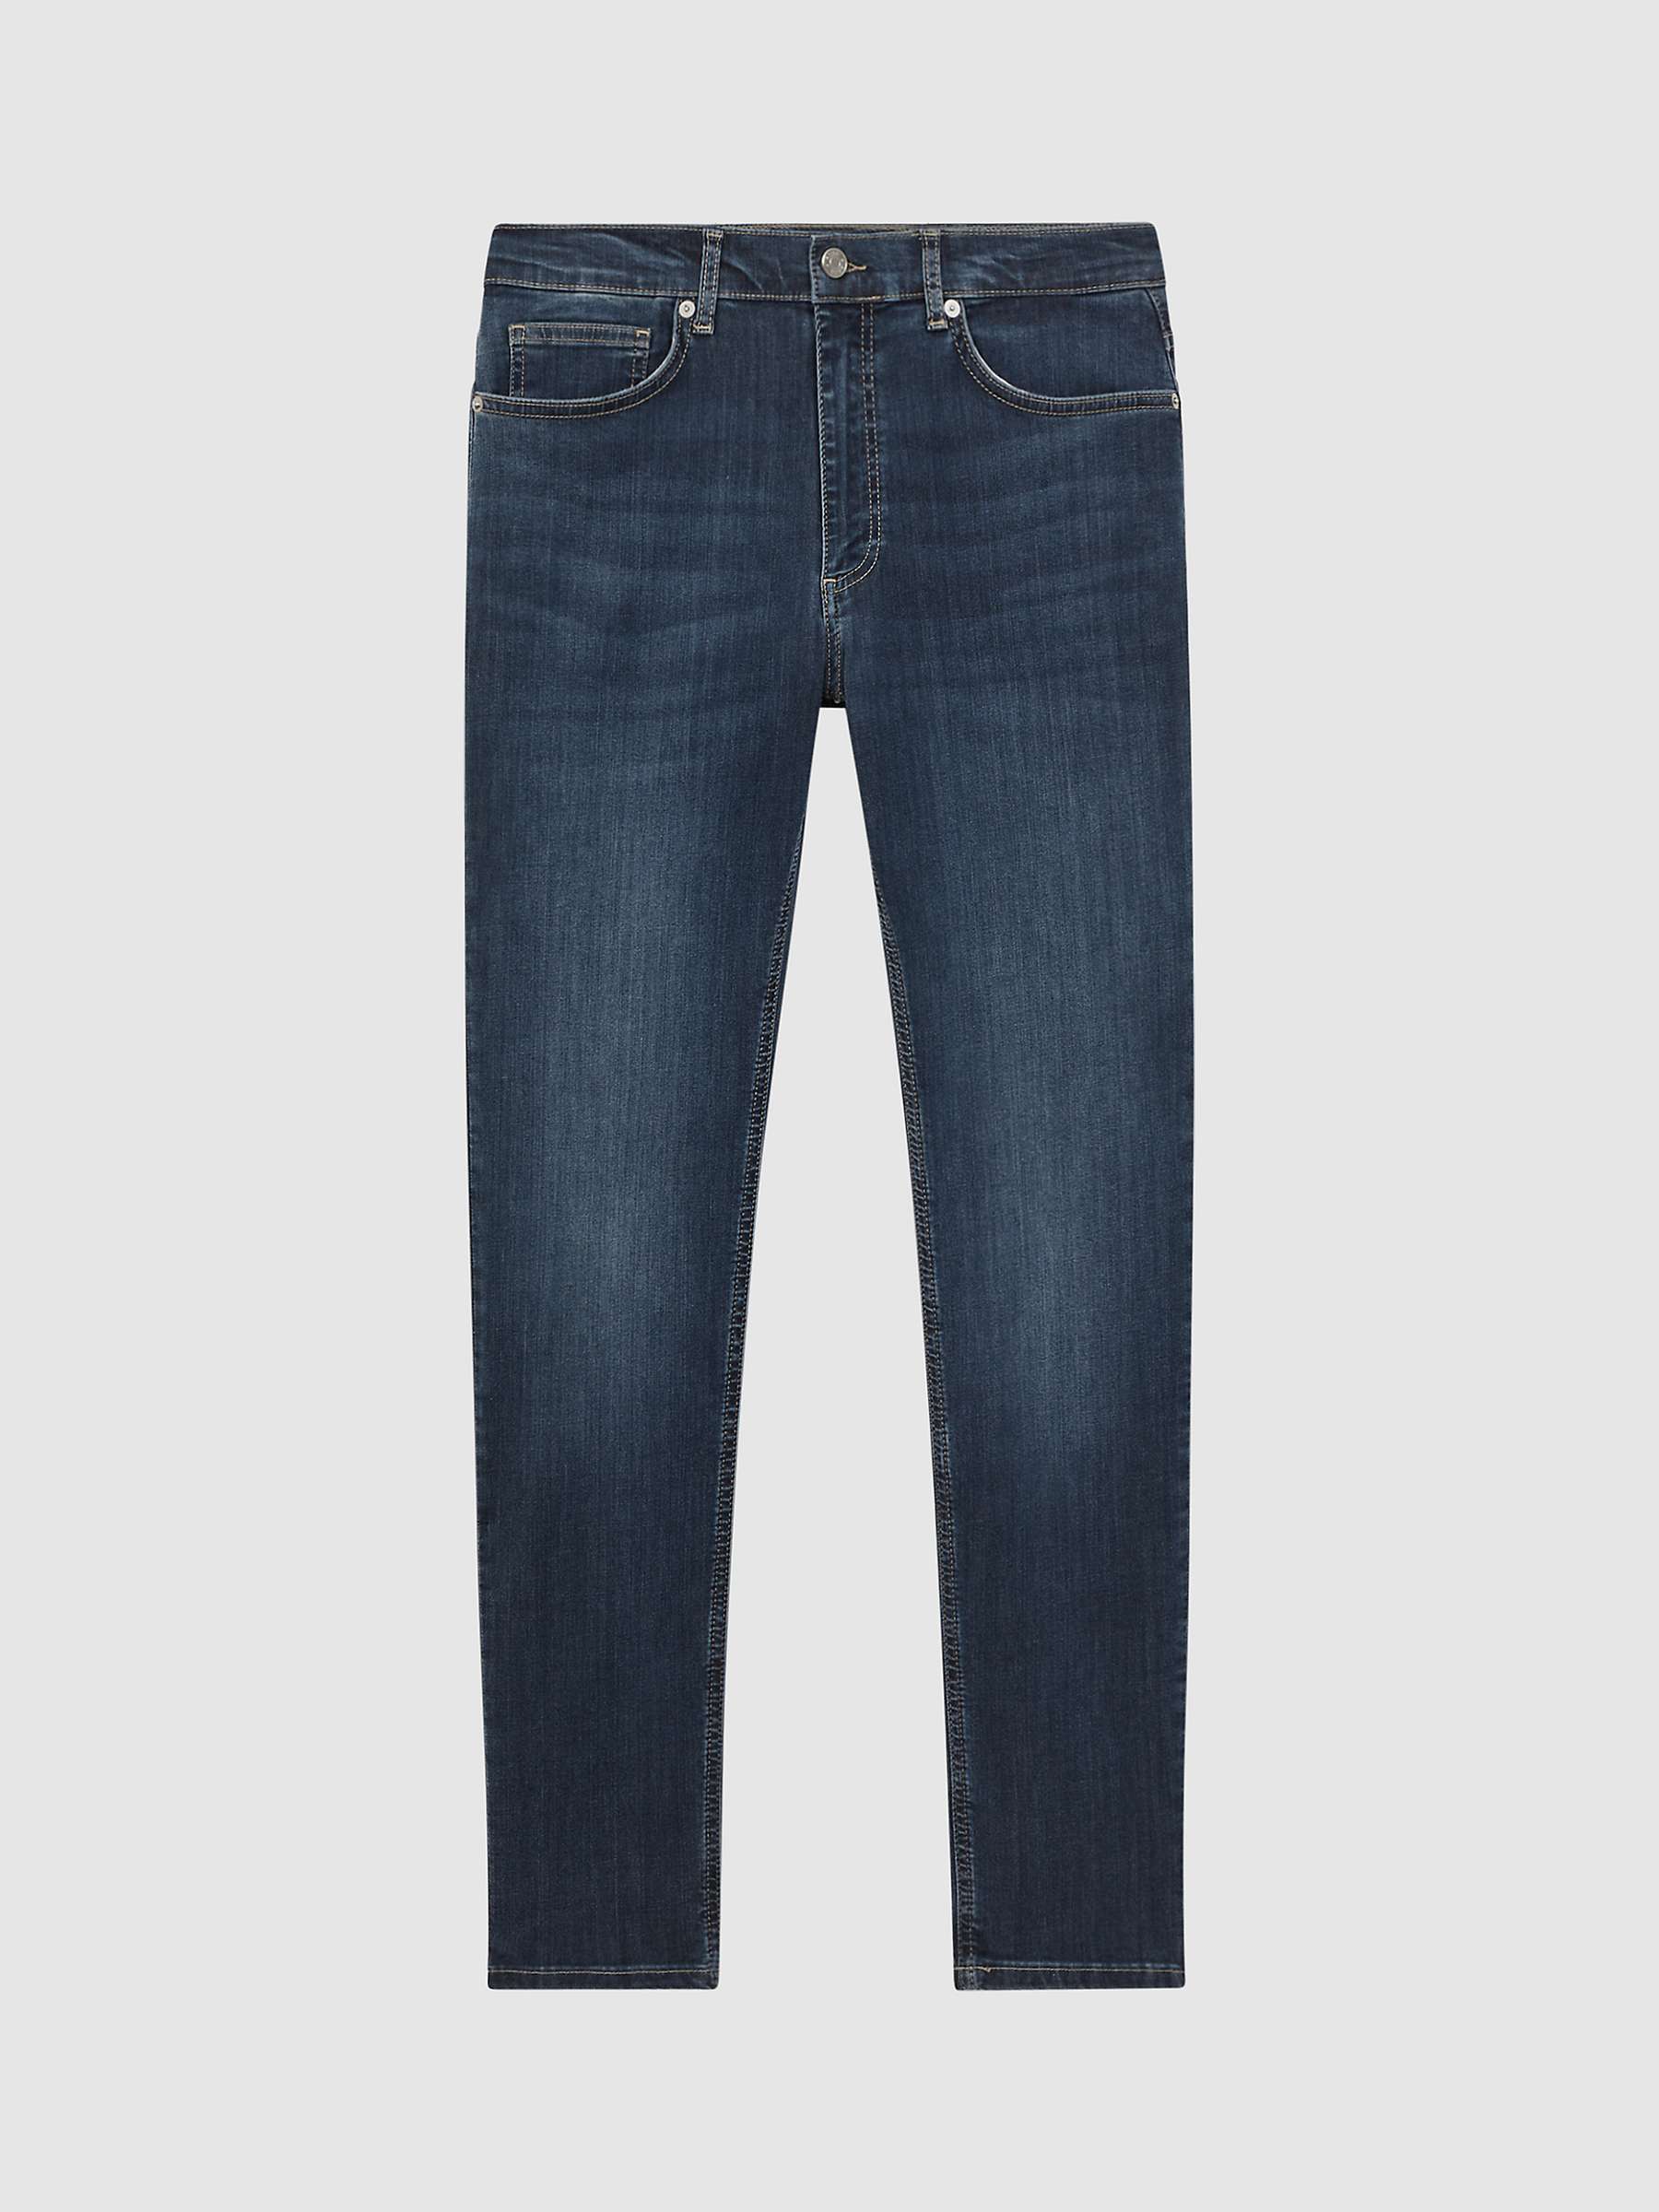 Buy Reiss James Jersey Slim Fit Jeans, Indigo Online at johnlewis.com